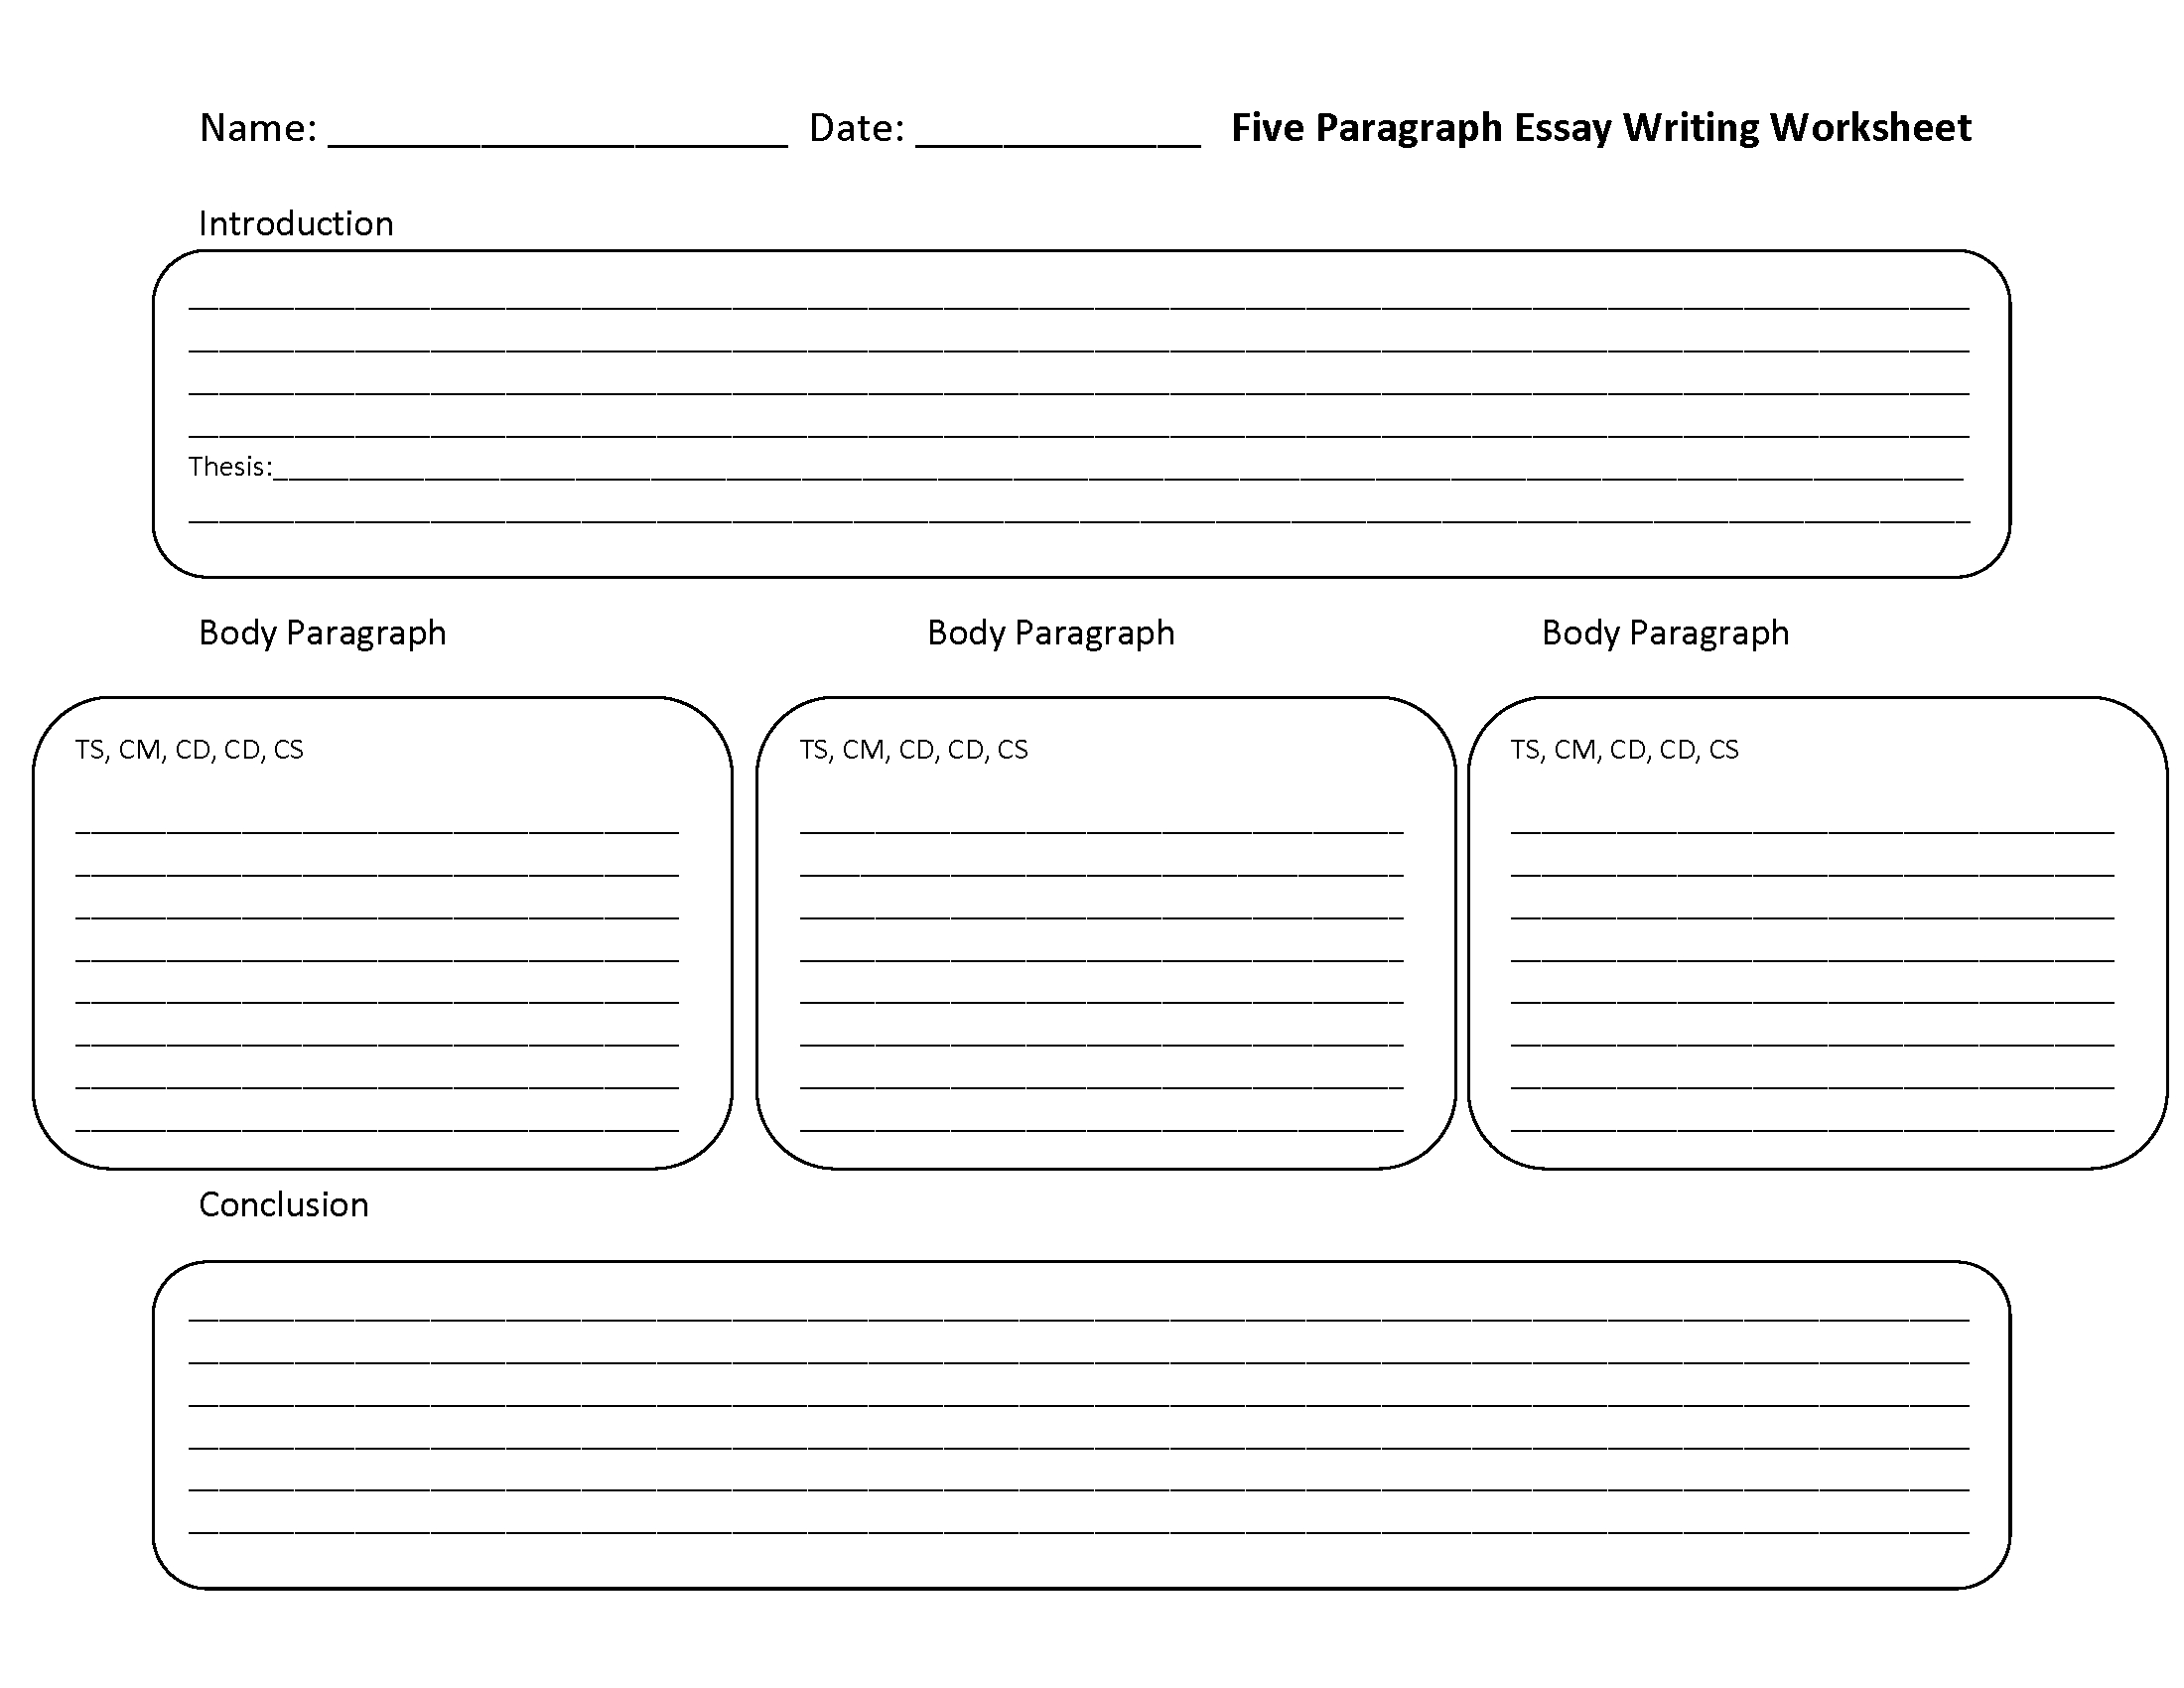 Free Printable Essay Writing Worksheets - Essay Writing Worksheets - Free Printable Writing Worksheets